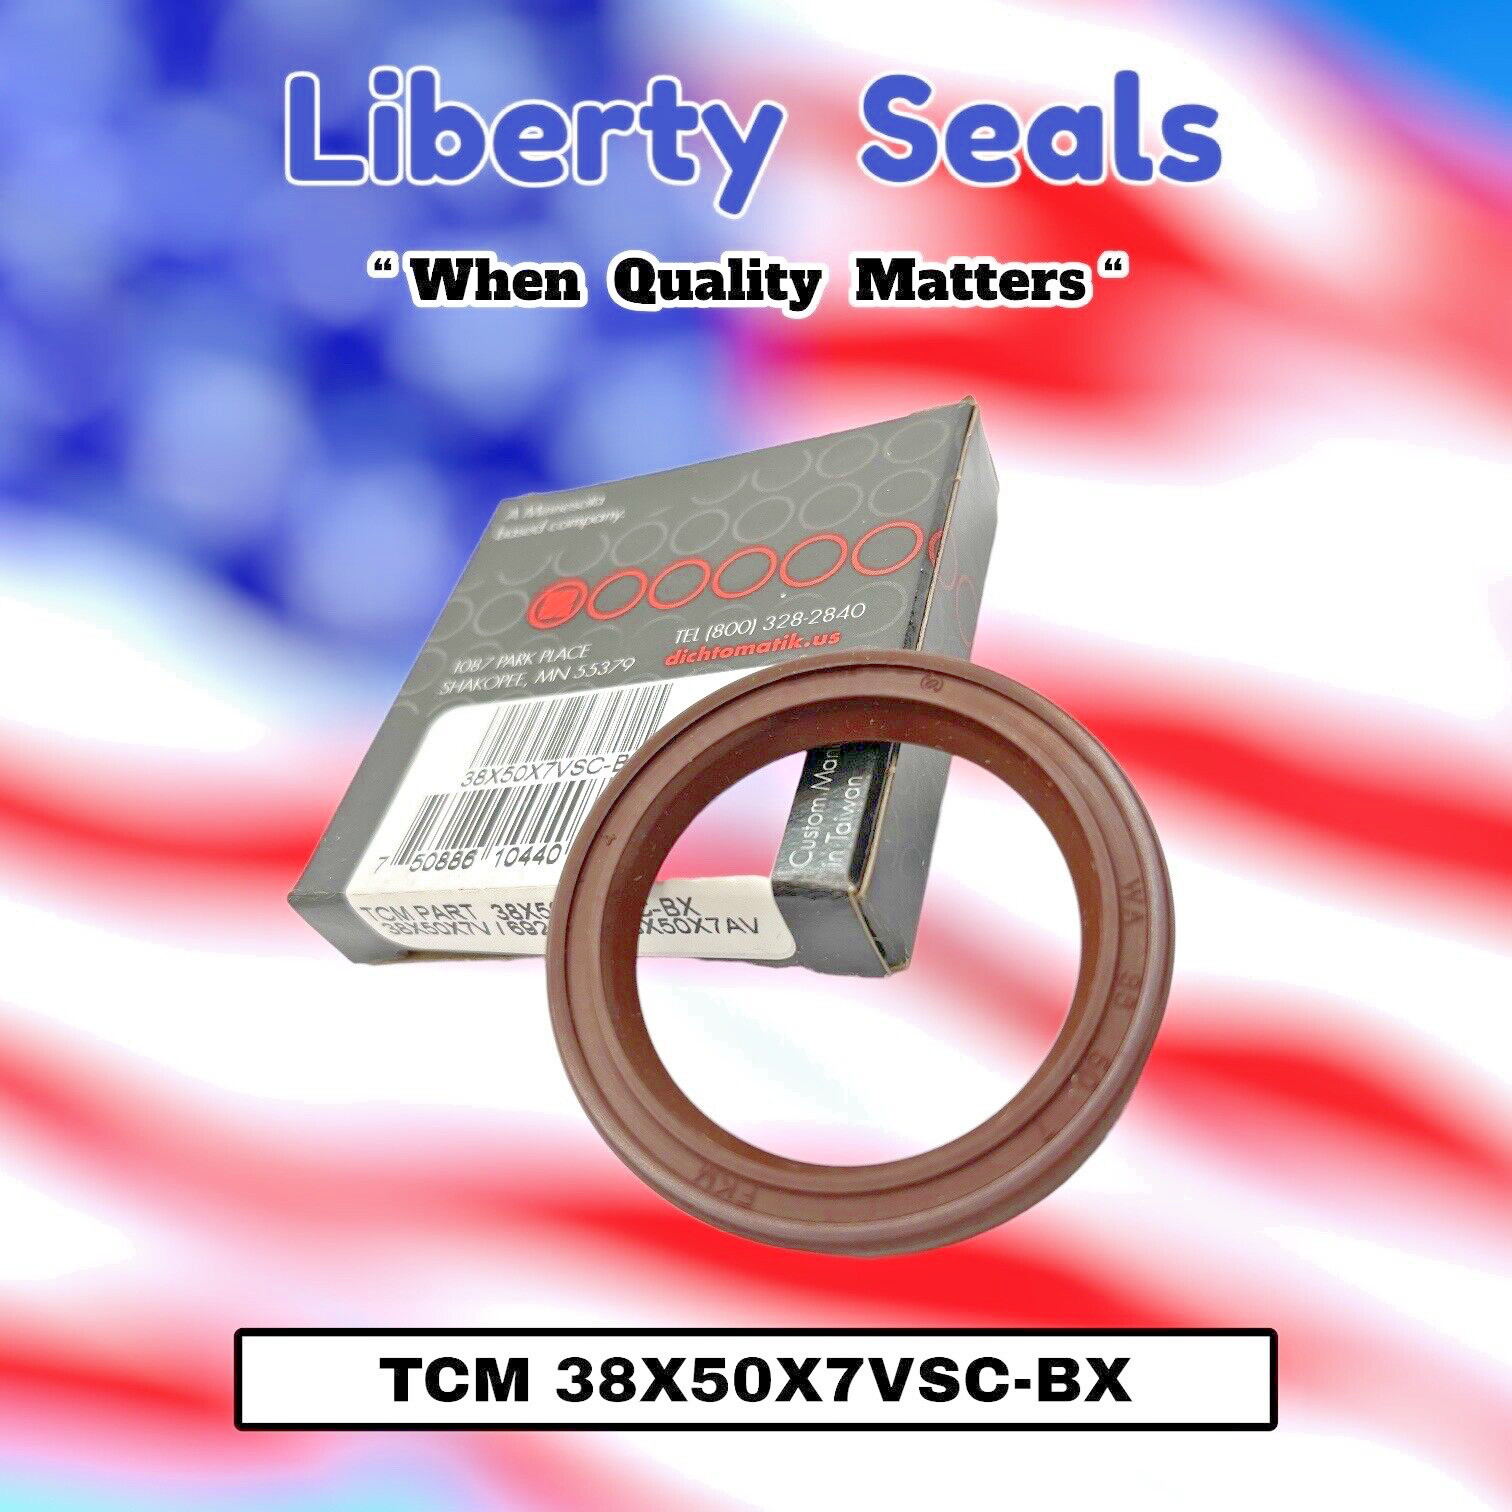 TCM 38X50X7VSC-BX FKM/Carbon Steel Oil Seal SC Type. By Liberty Seals Inc.